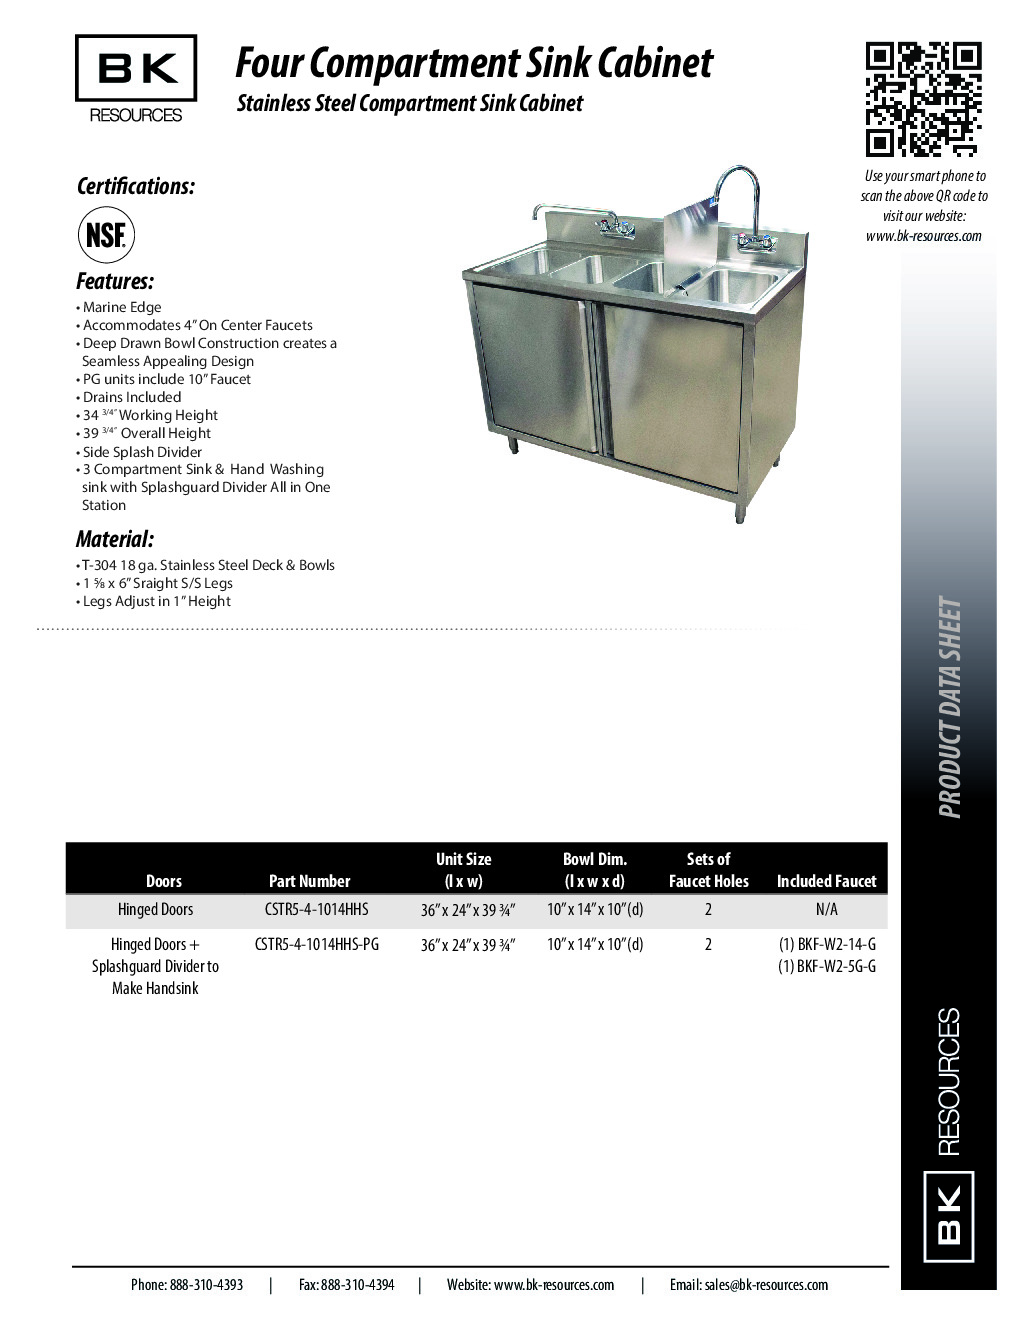 BK Resources CSTR5-4-1014HHS-PG (4) Four Compartment Sink